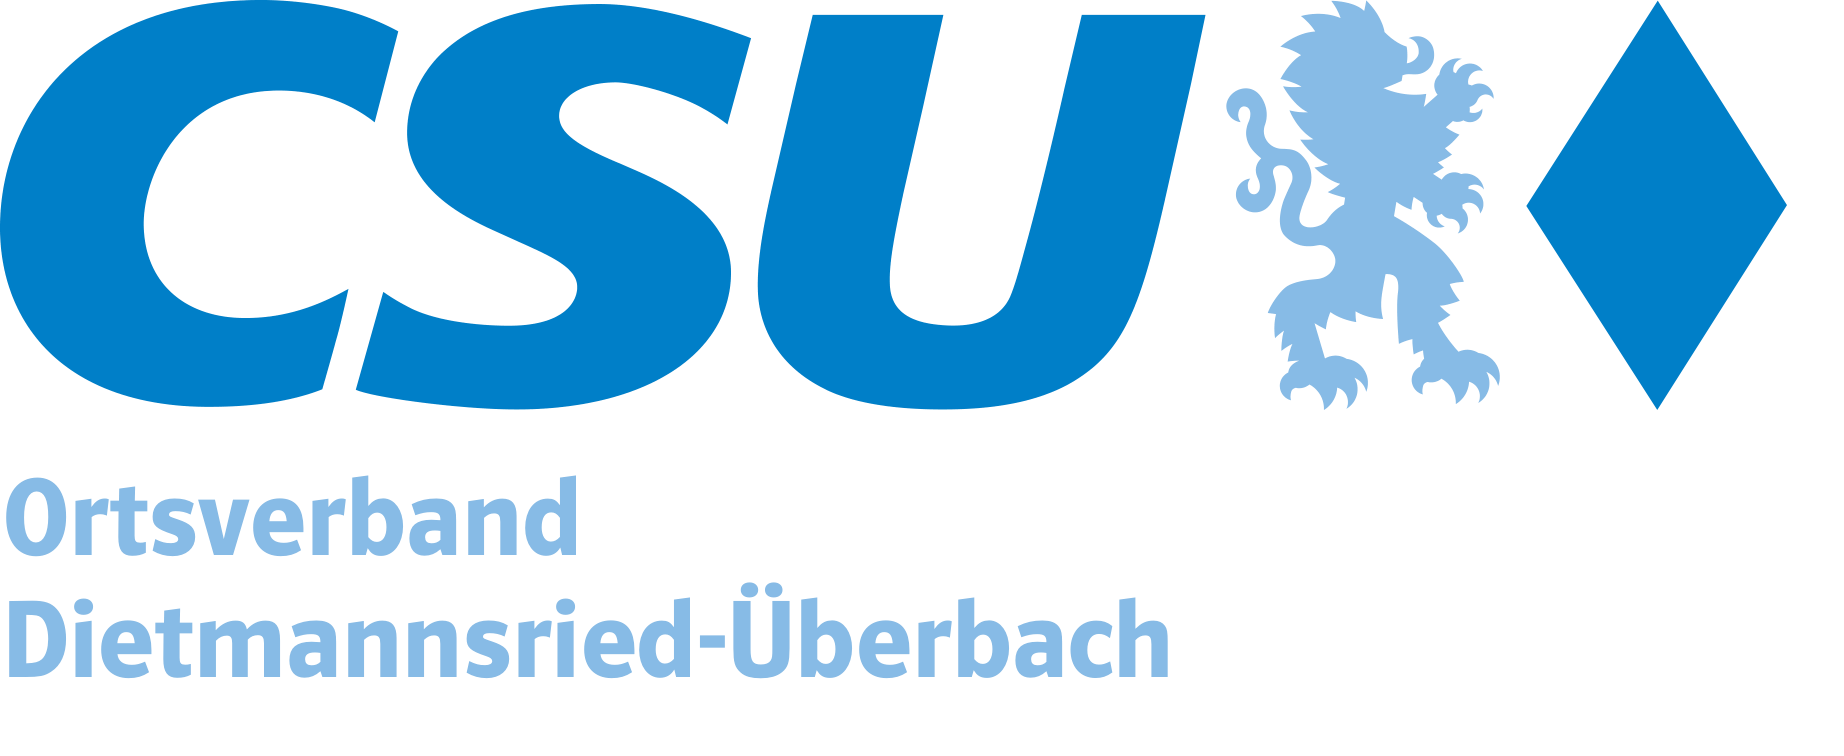 CSU Dietmannsried-berbach